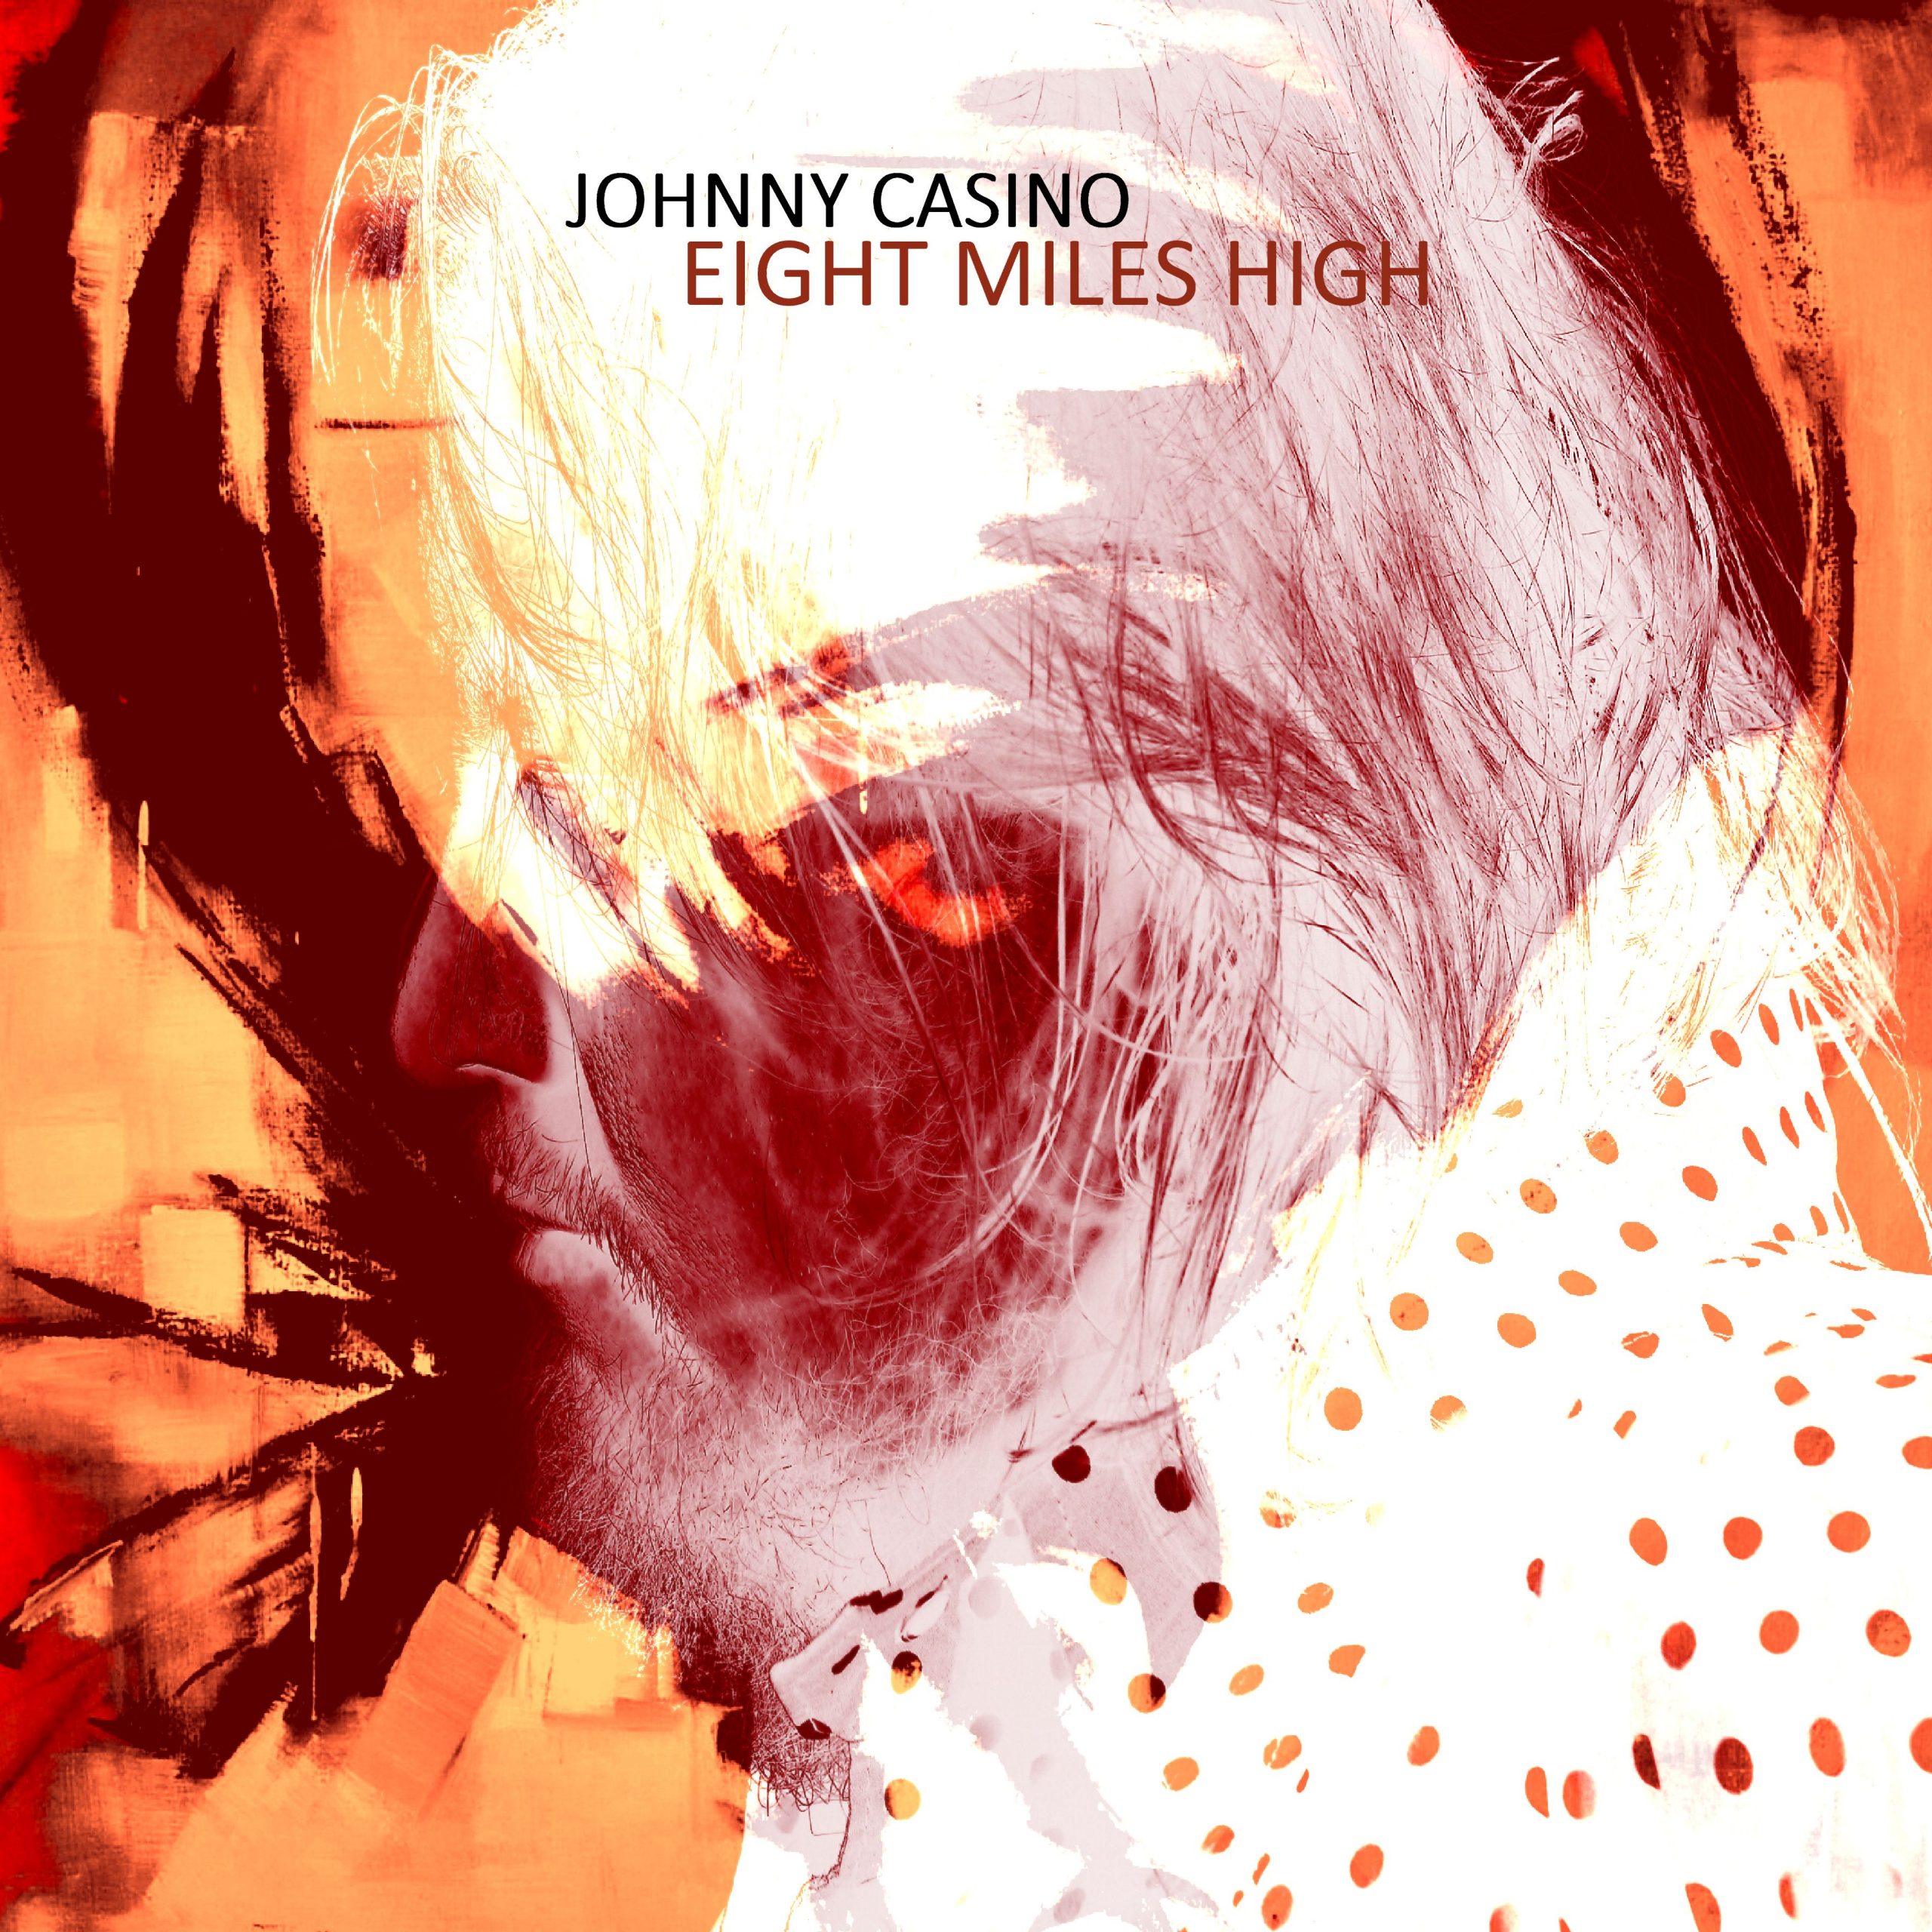 Johnny Casino - Eight Miles High